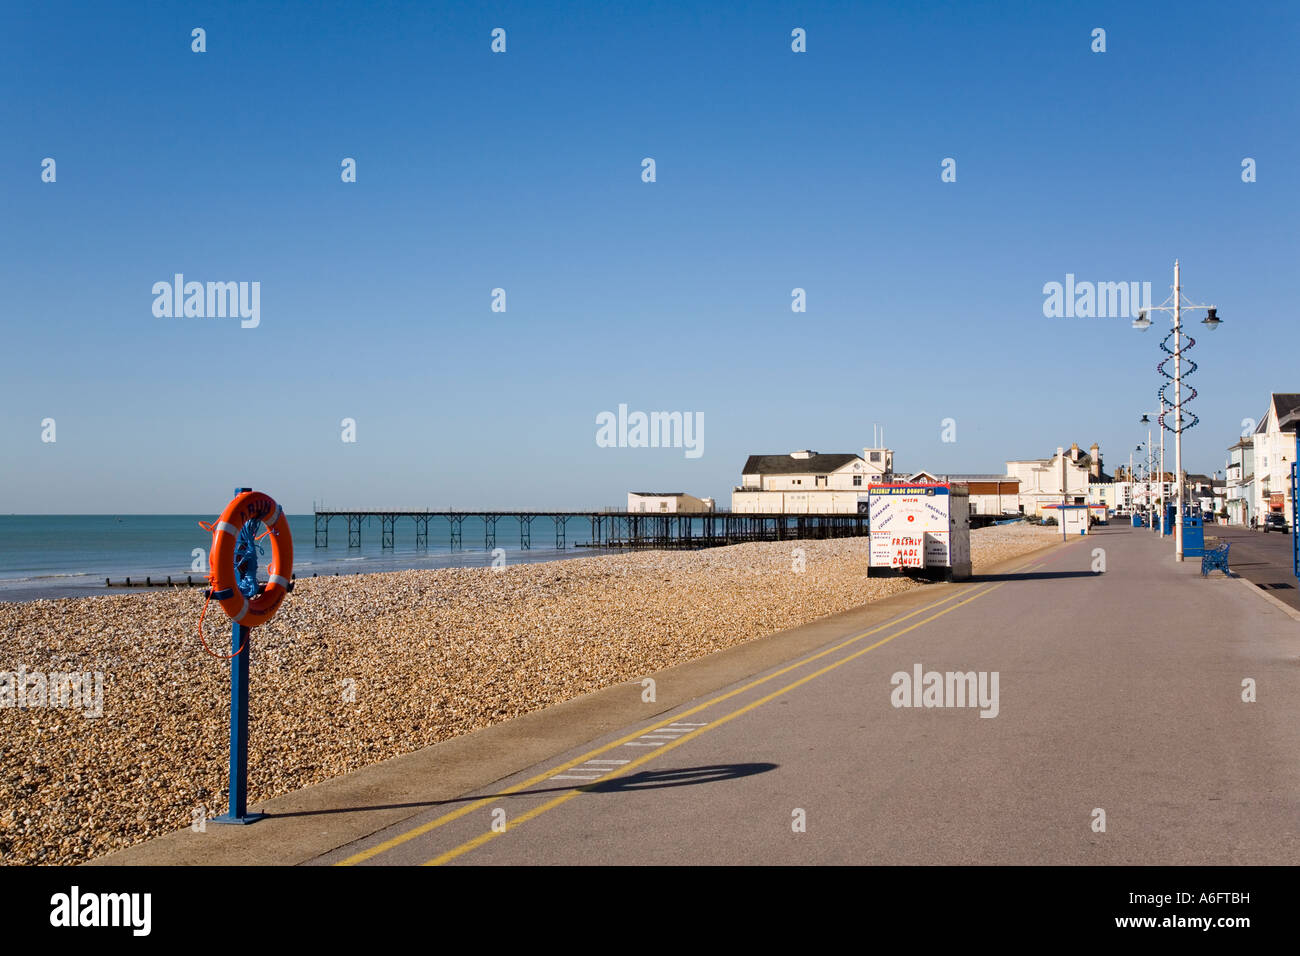 Seafront promenade empty beach and pier in Bognor Regis West Sussex England UK Britain Stock Photo